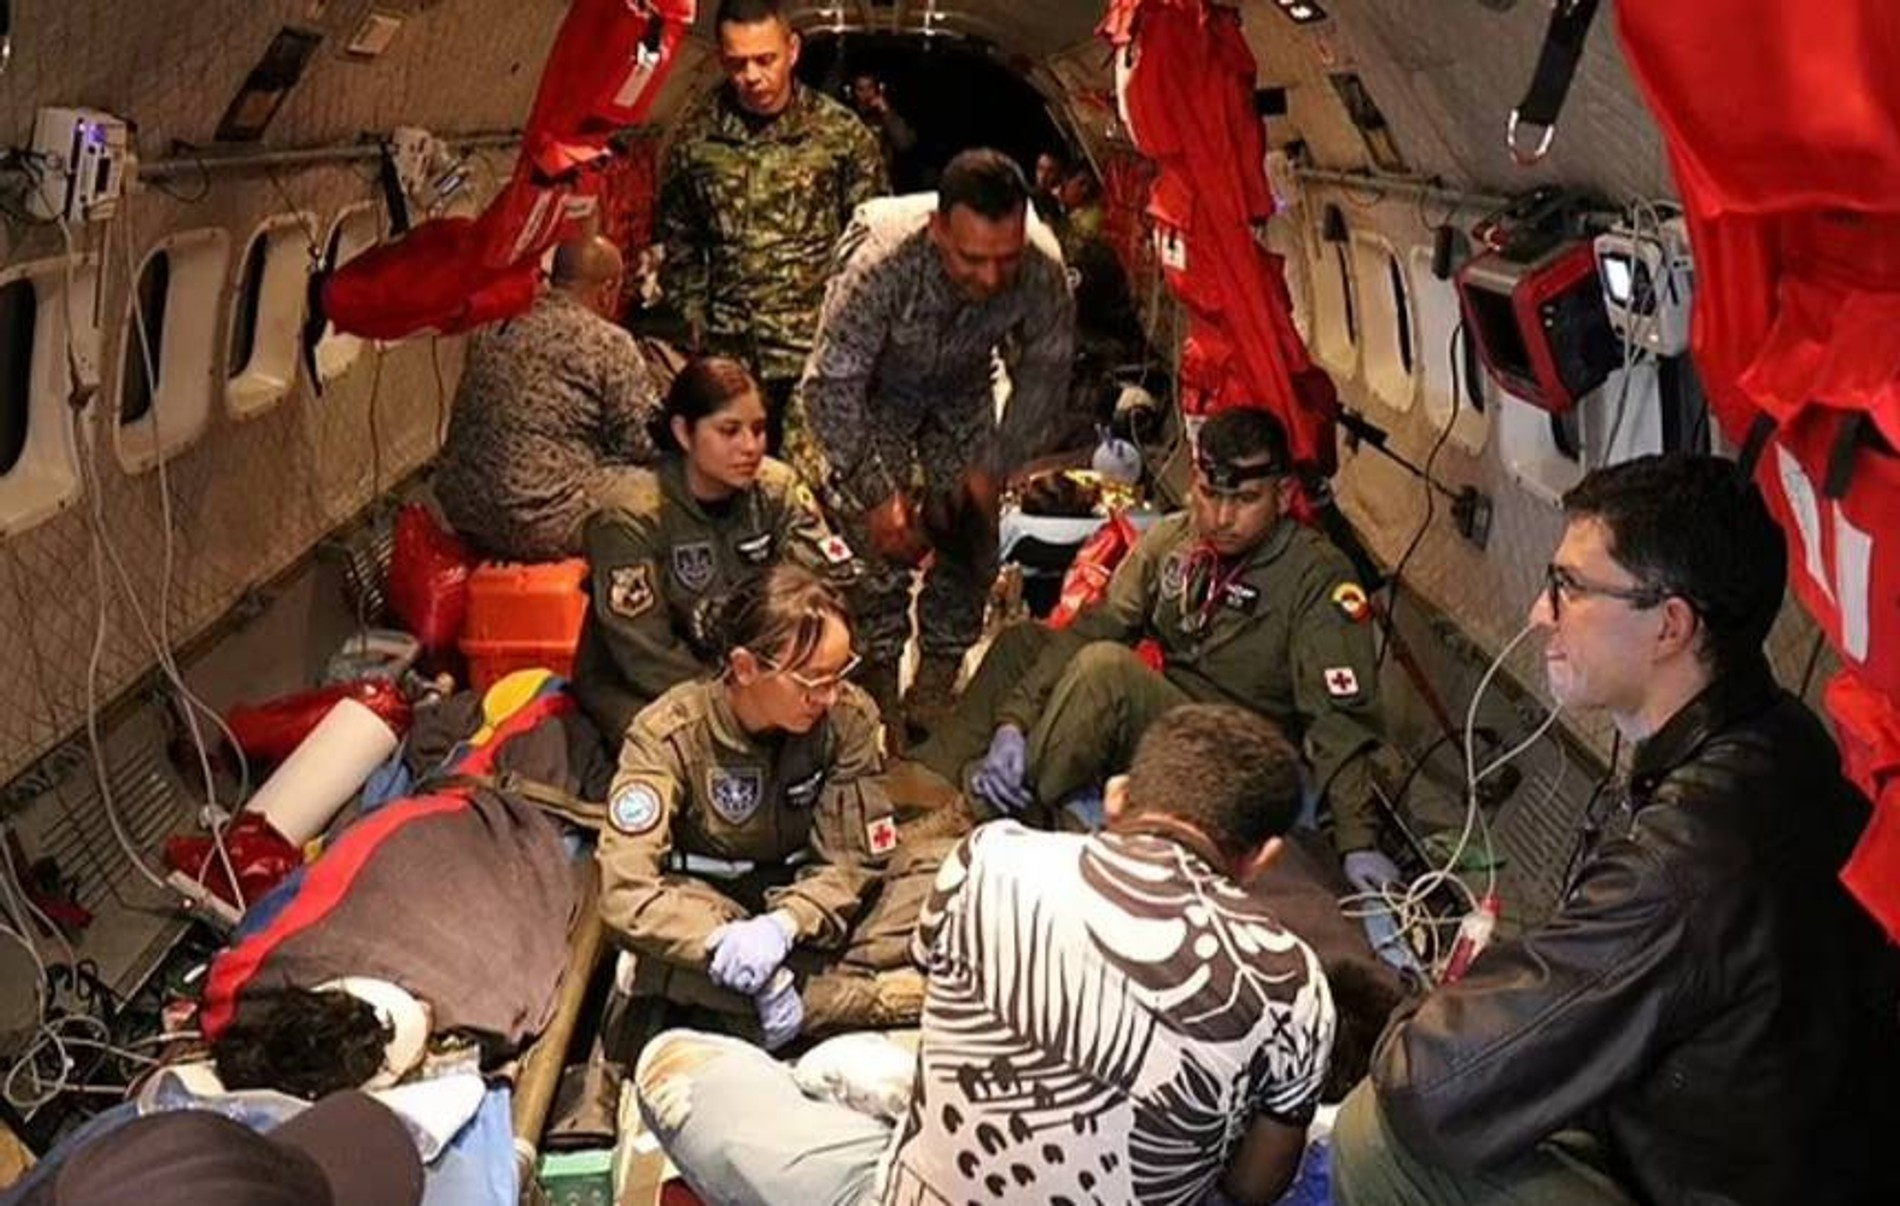 Дети и спасатели на борту эвакуационного самолета
Фото: Daily Mail